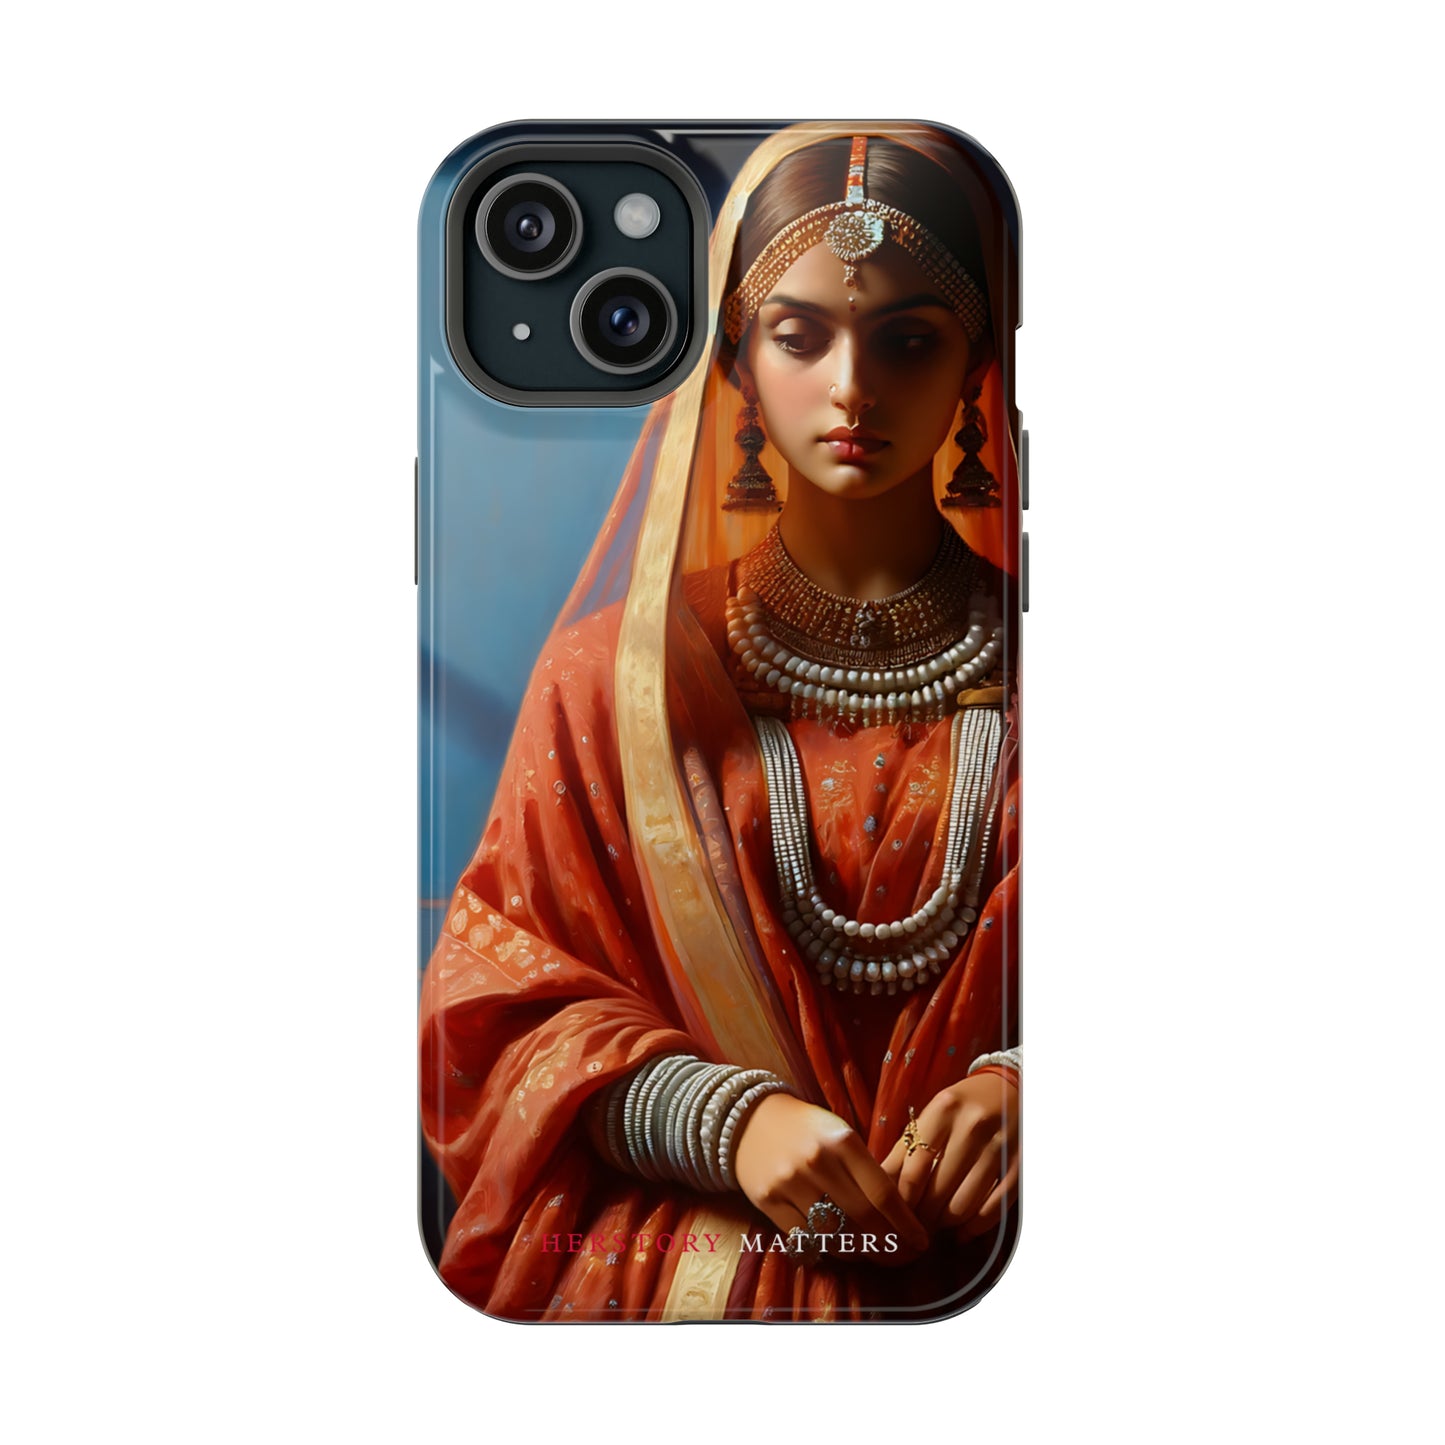 Rajput Princess in Contemplation MagSafe Tough Mobile Phone Cases